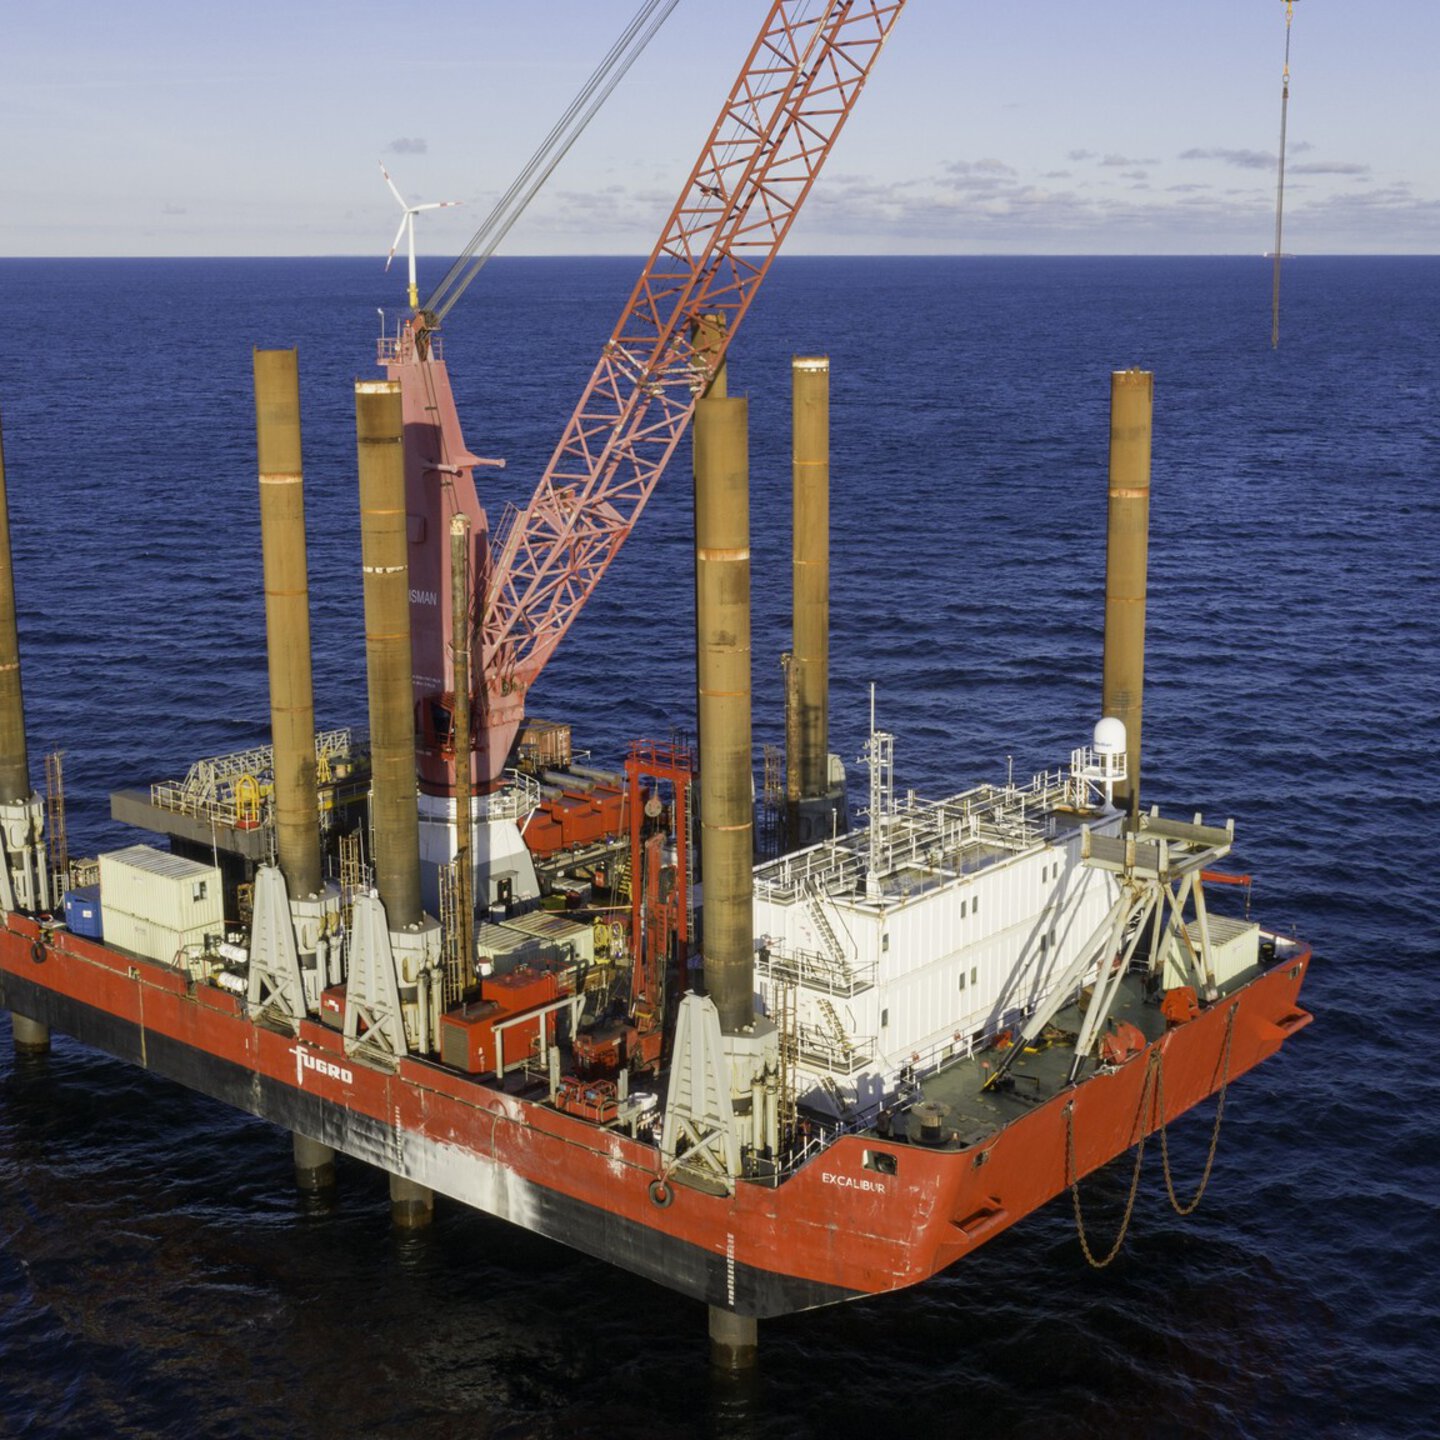 Excalibur jack-up rig working on Gennaker offshore wind farm